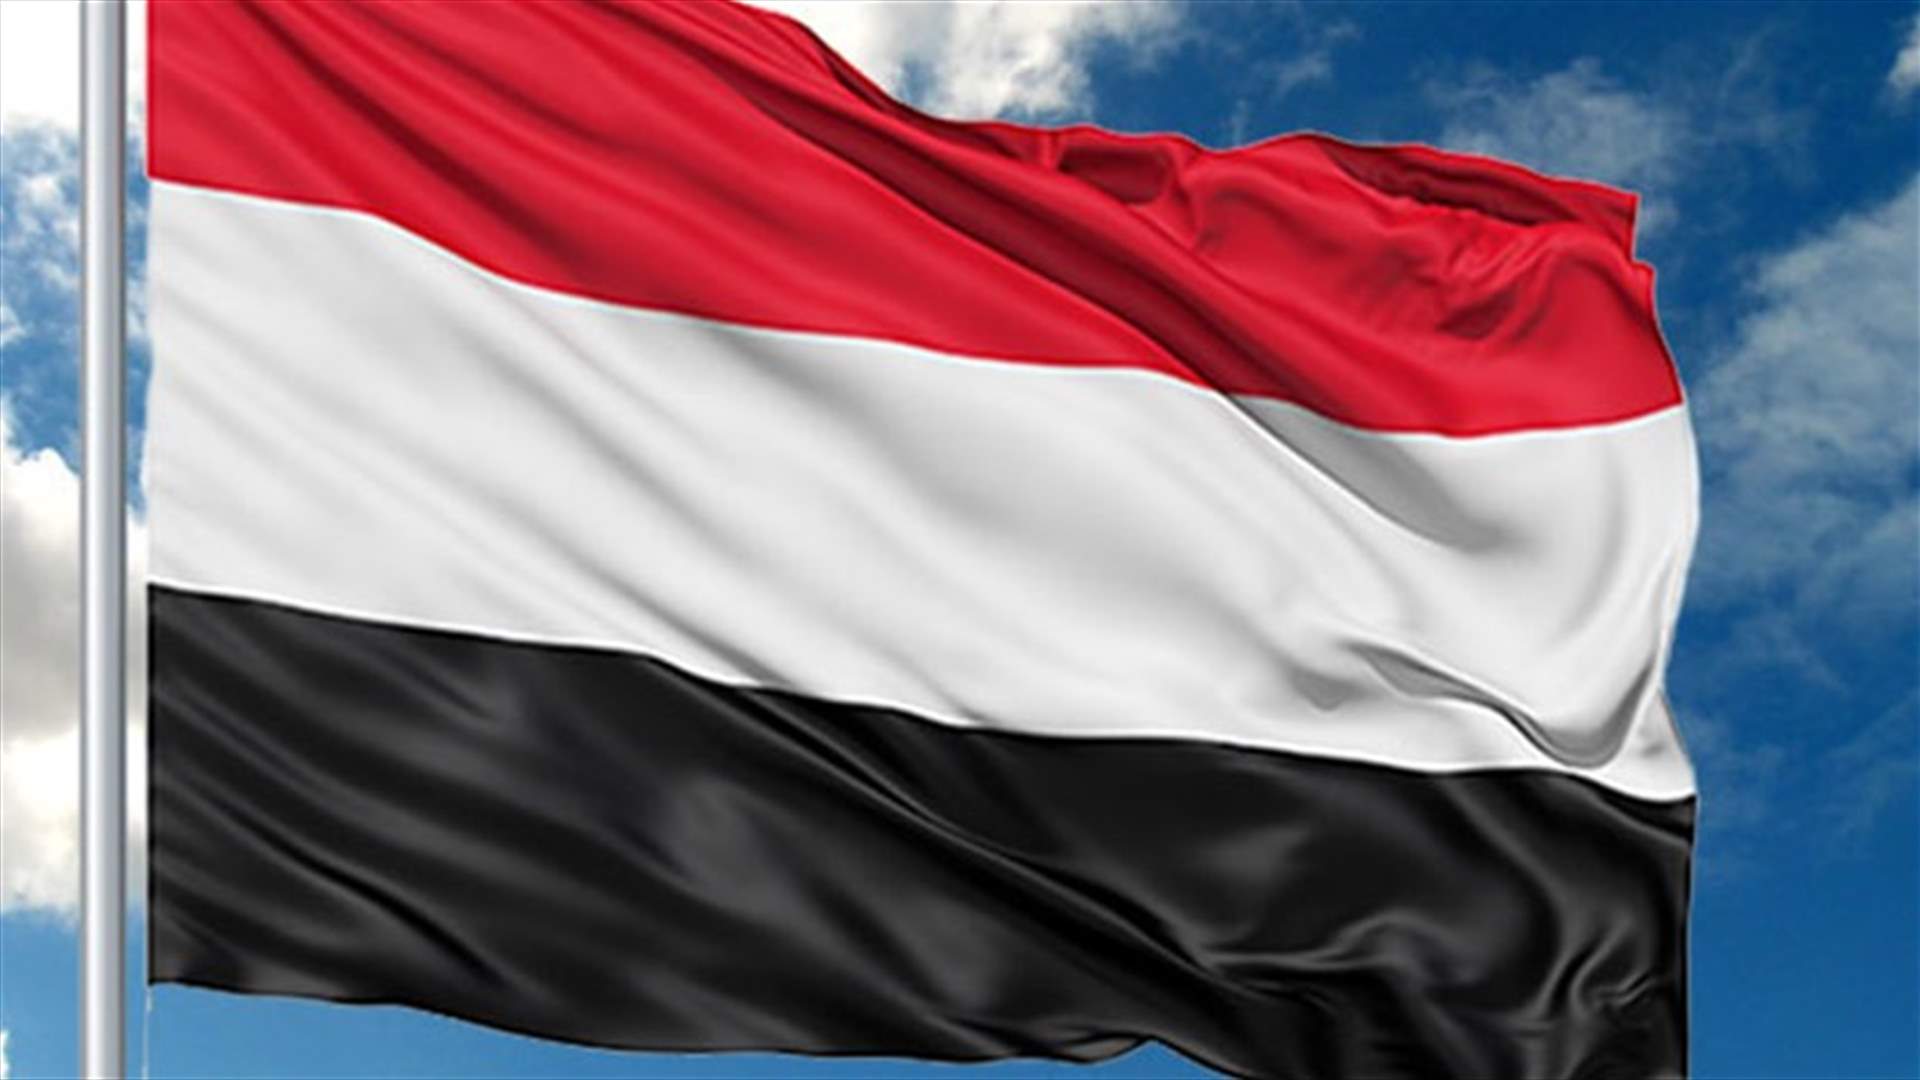 Coalition troops seize main Yemen oil terminal from al Qaeda - sources